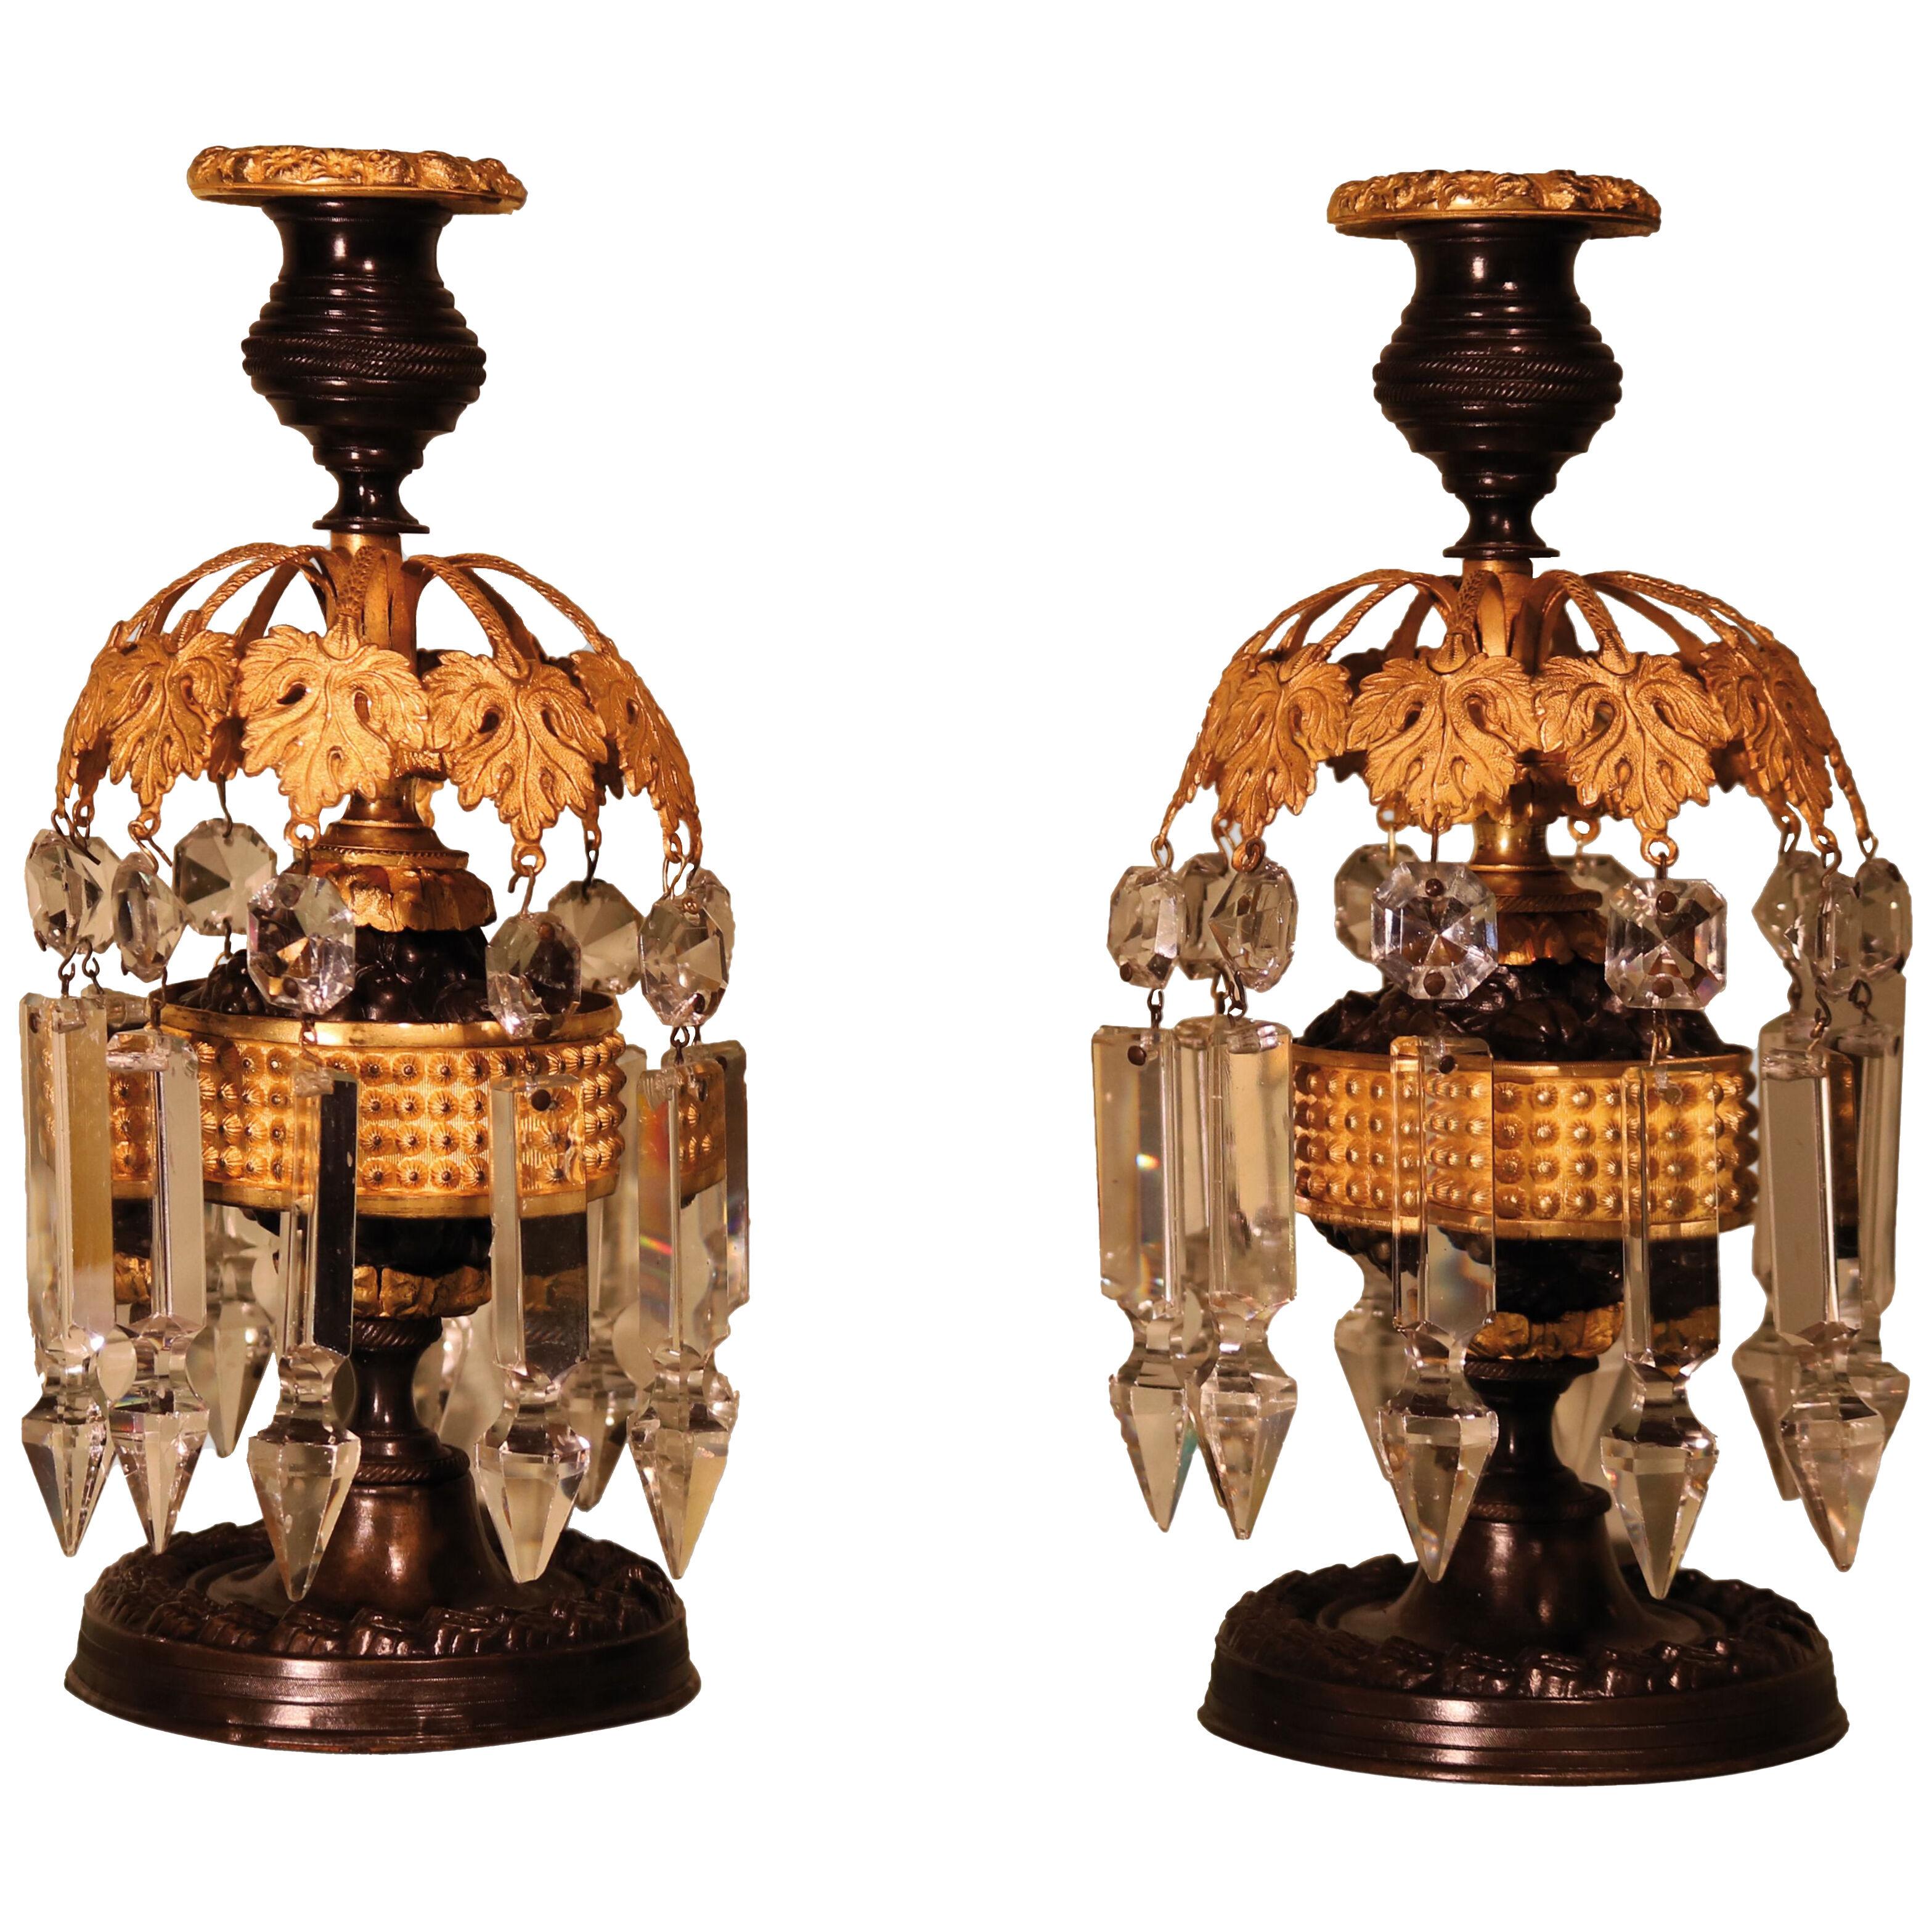 A pair of Regency period bronze and ormolu glass lustre candlesticks